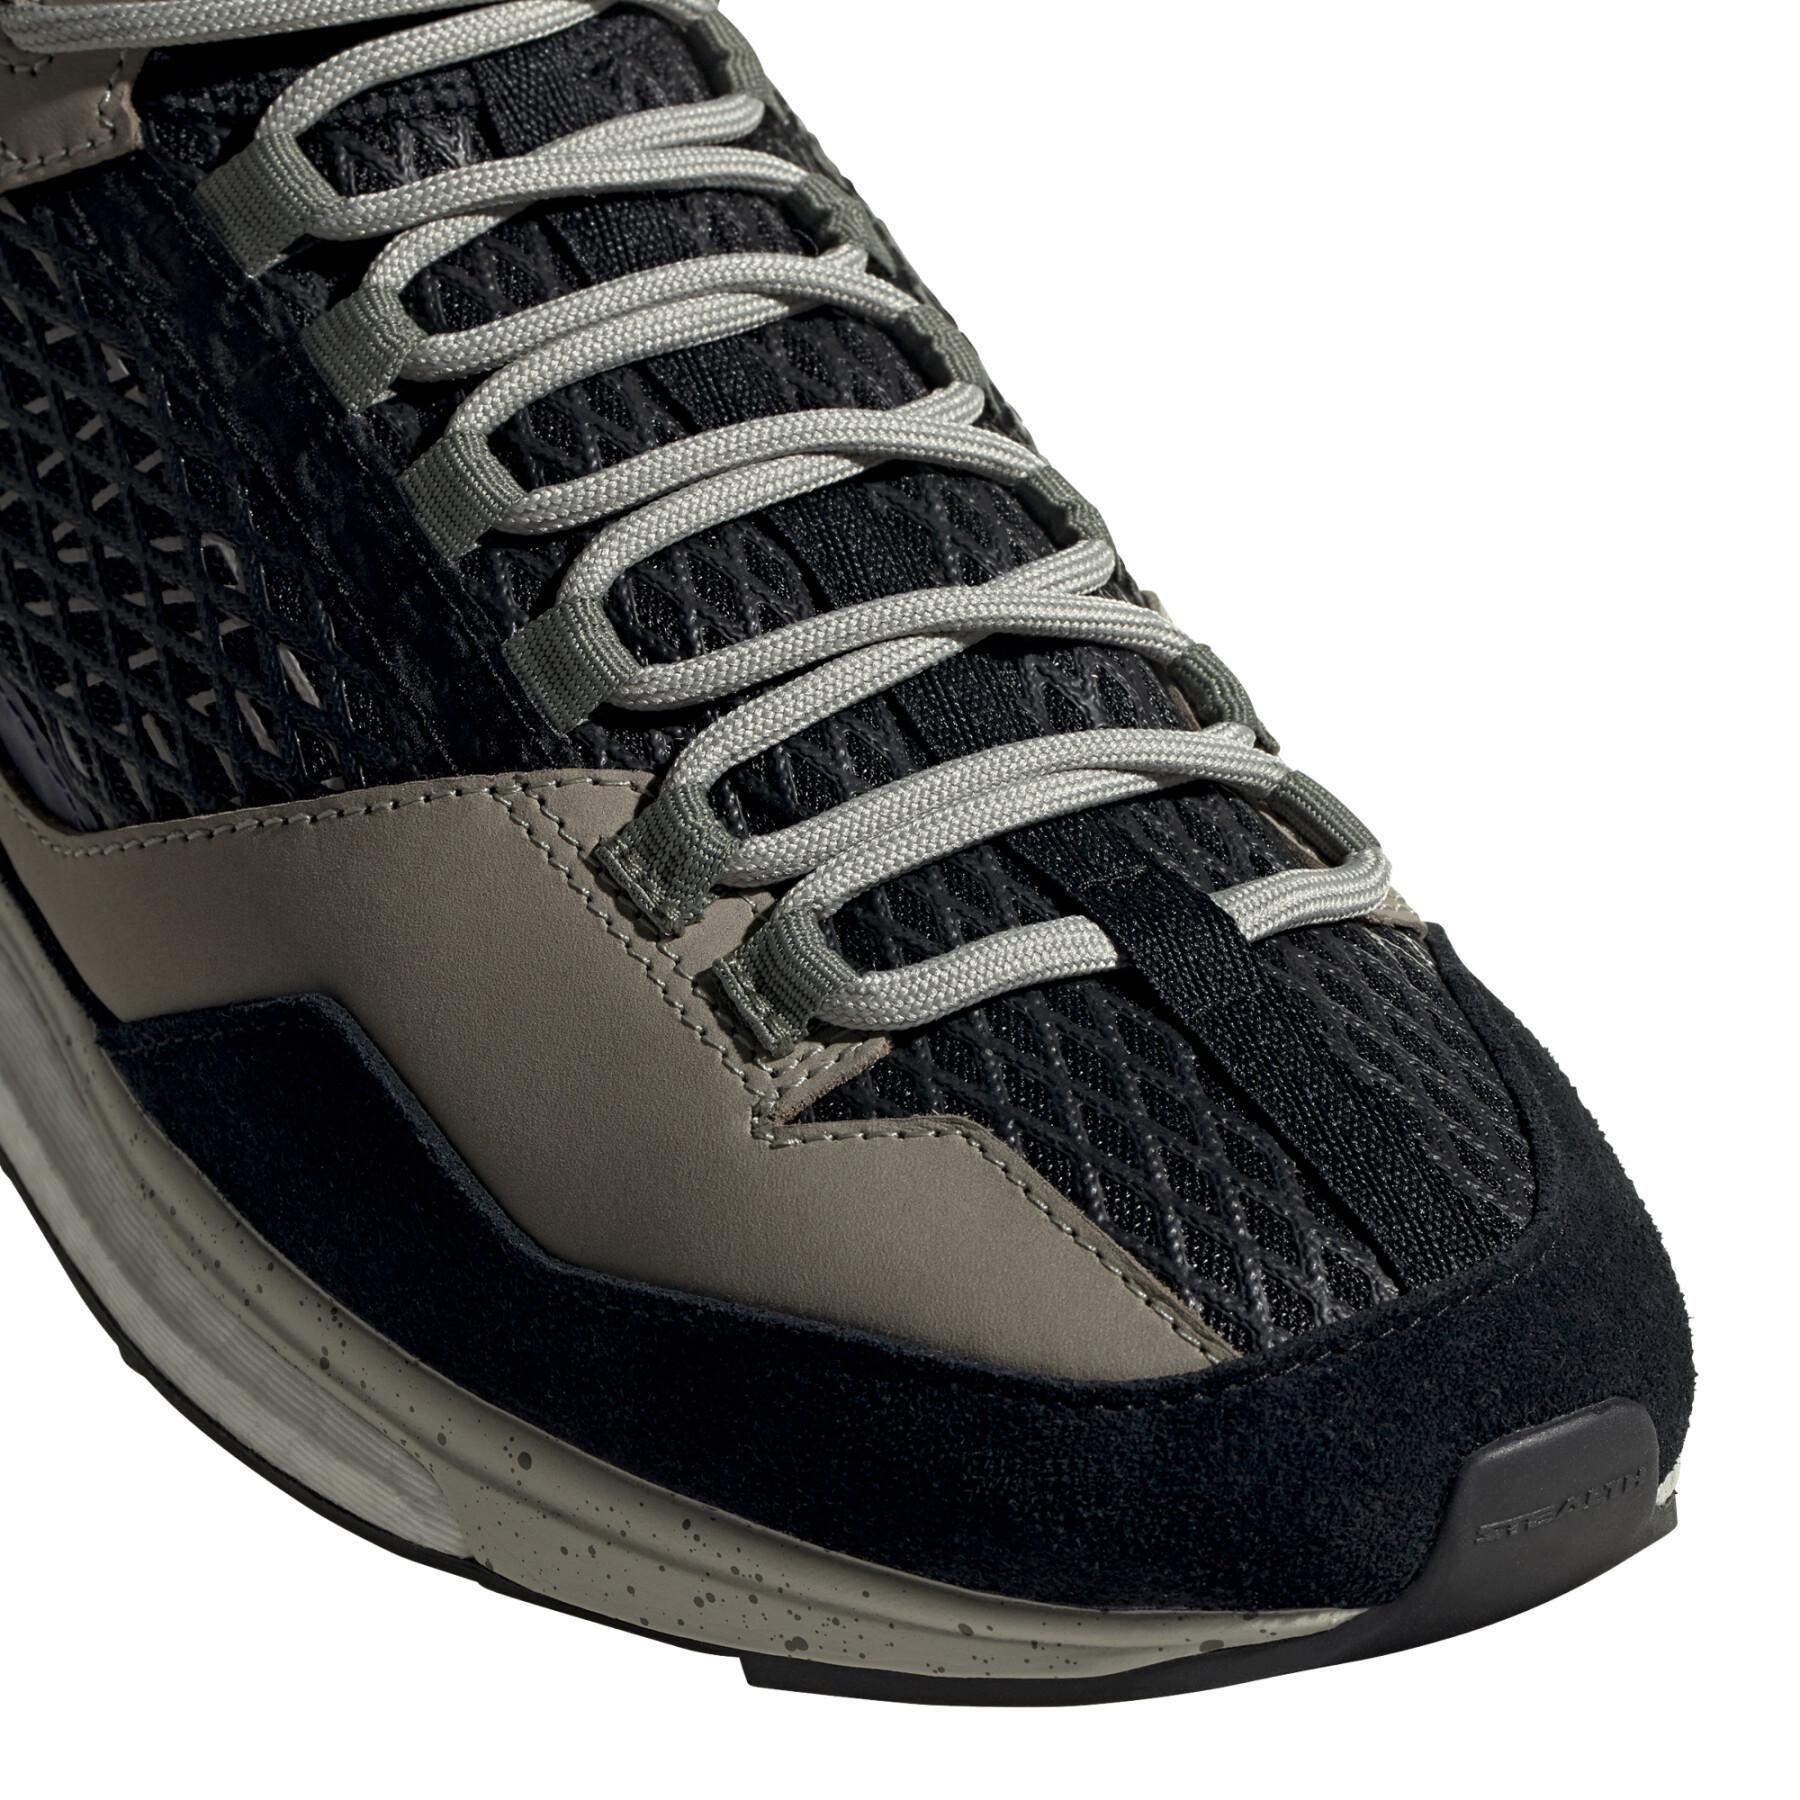 Shoes adidas Five Ten Five Tennie DLX Approach